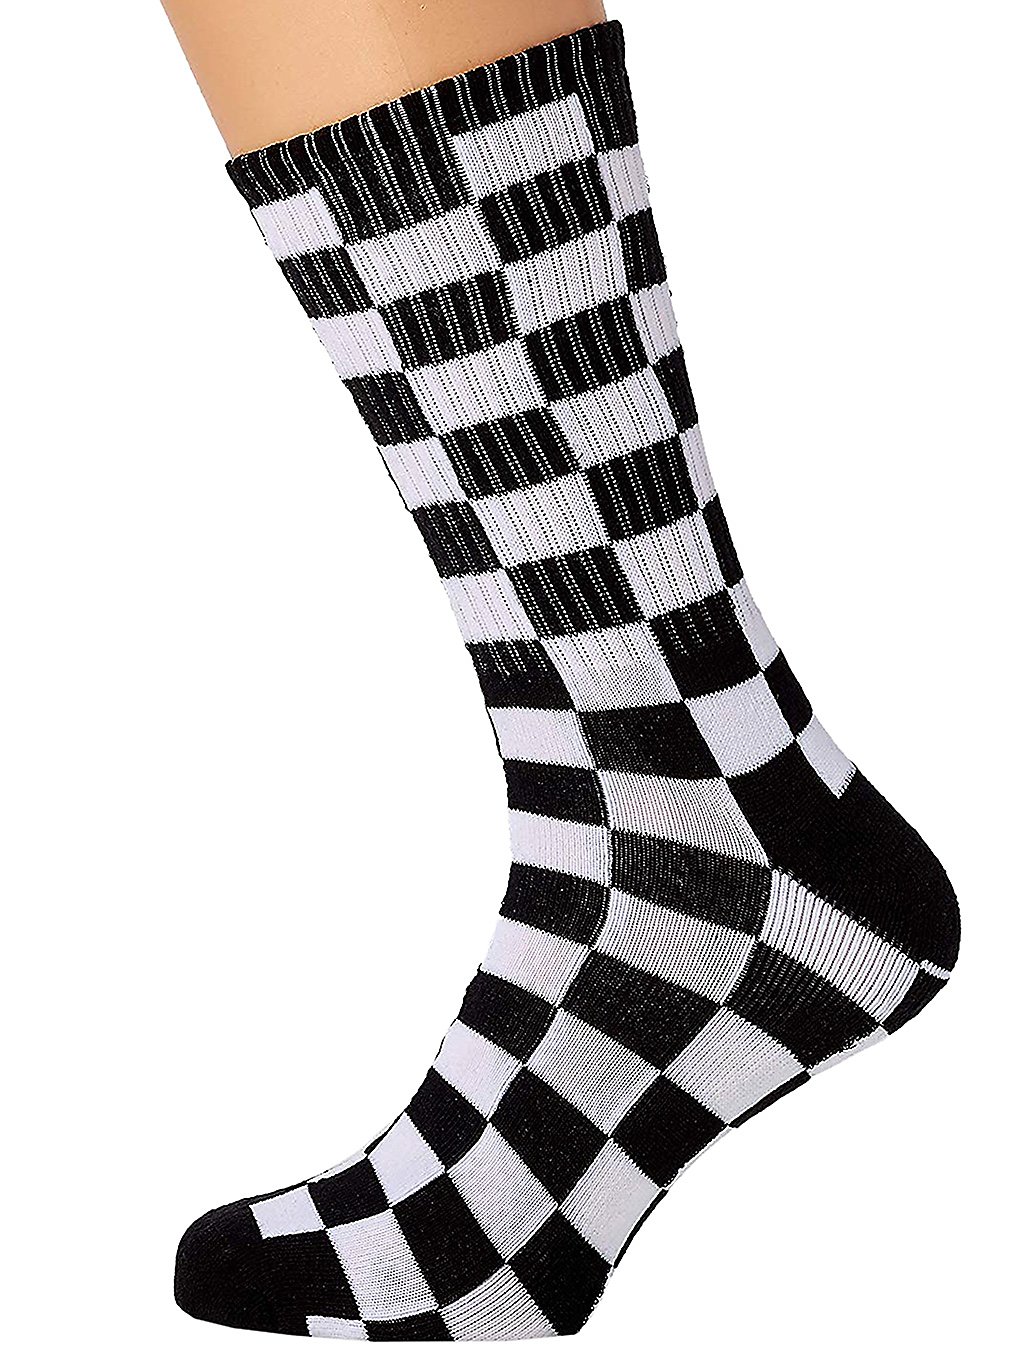 Vans Checkerboard II Crew (6.5-9) Socks noir